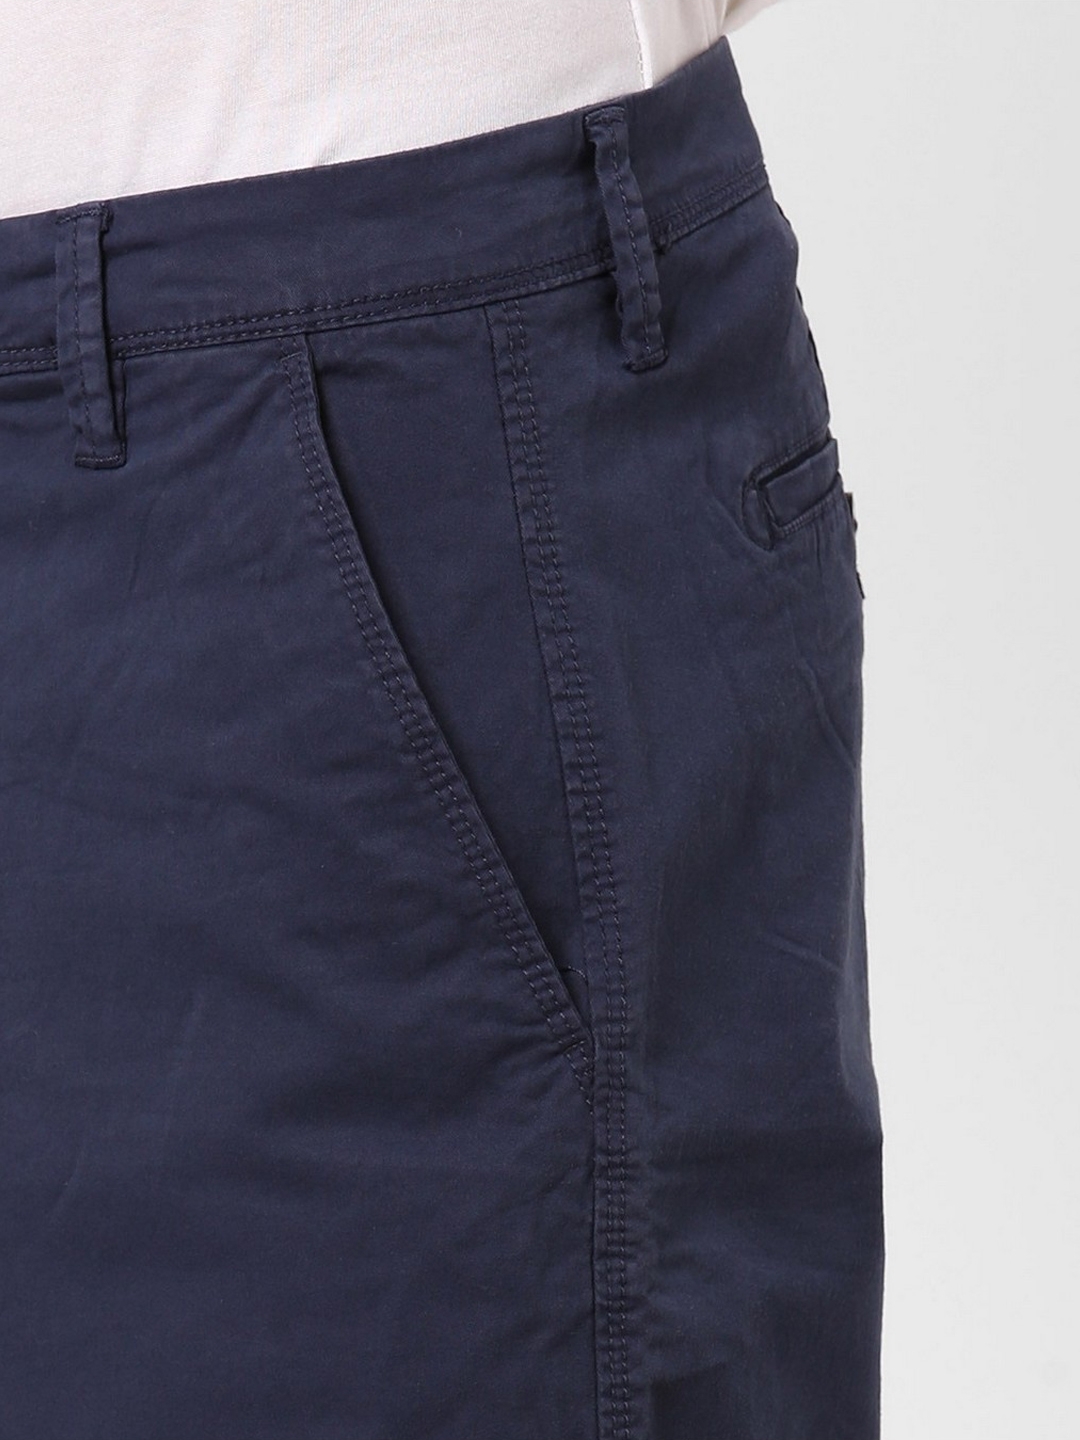 Men's Grimm solid blue shorts